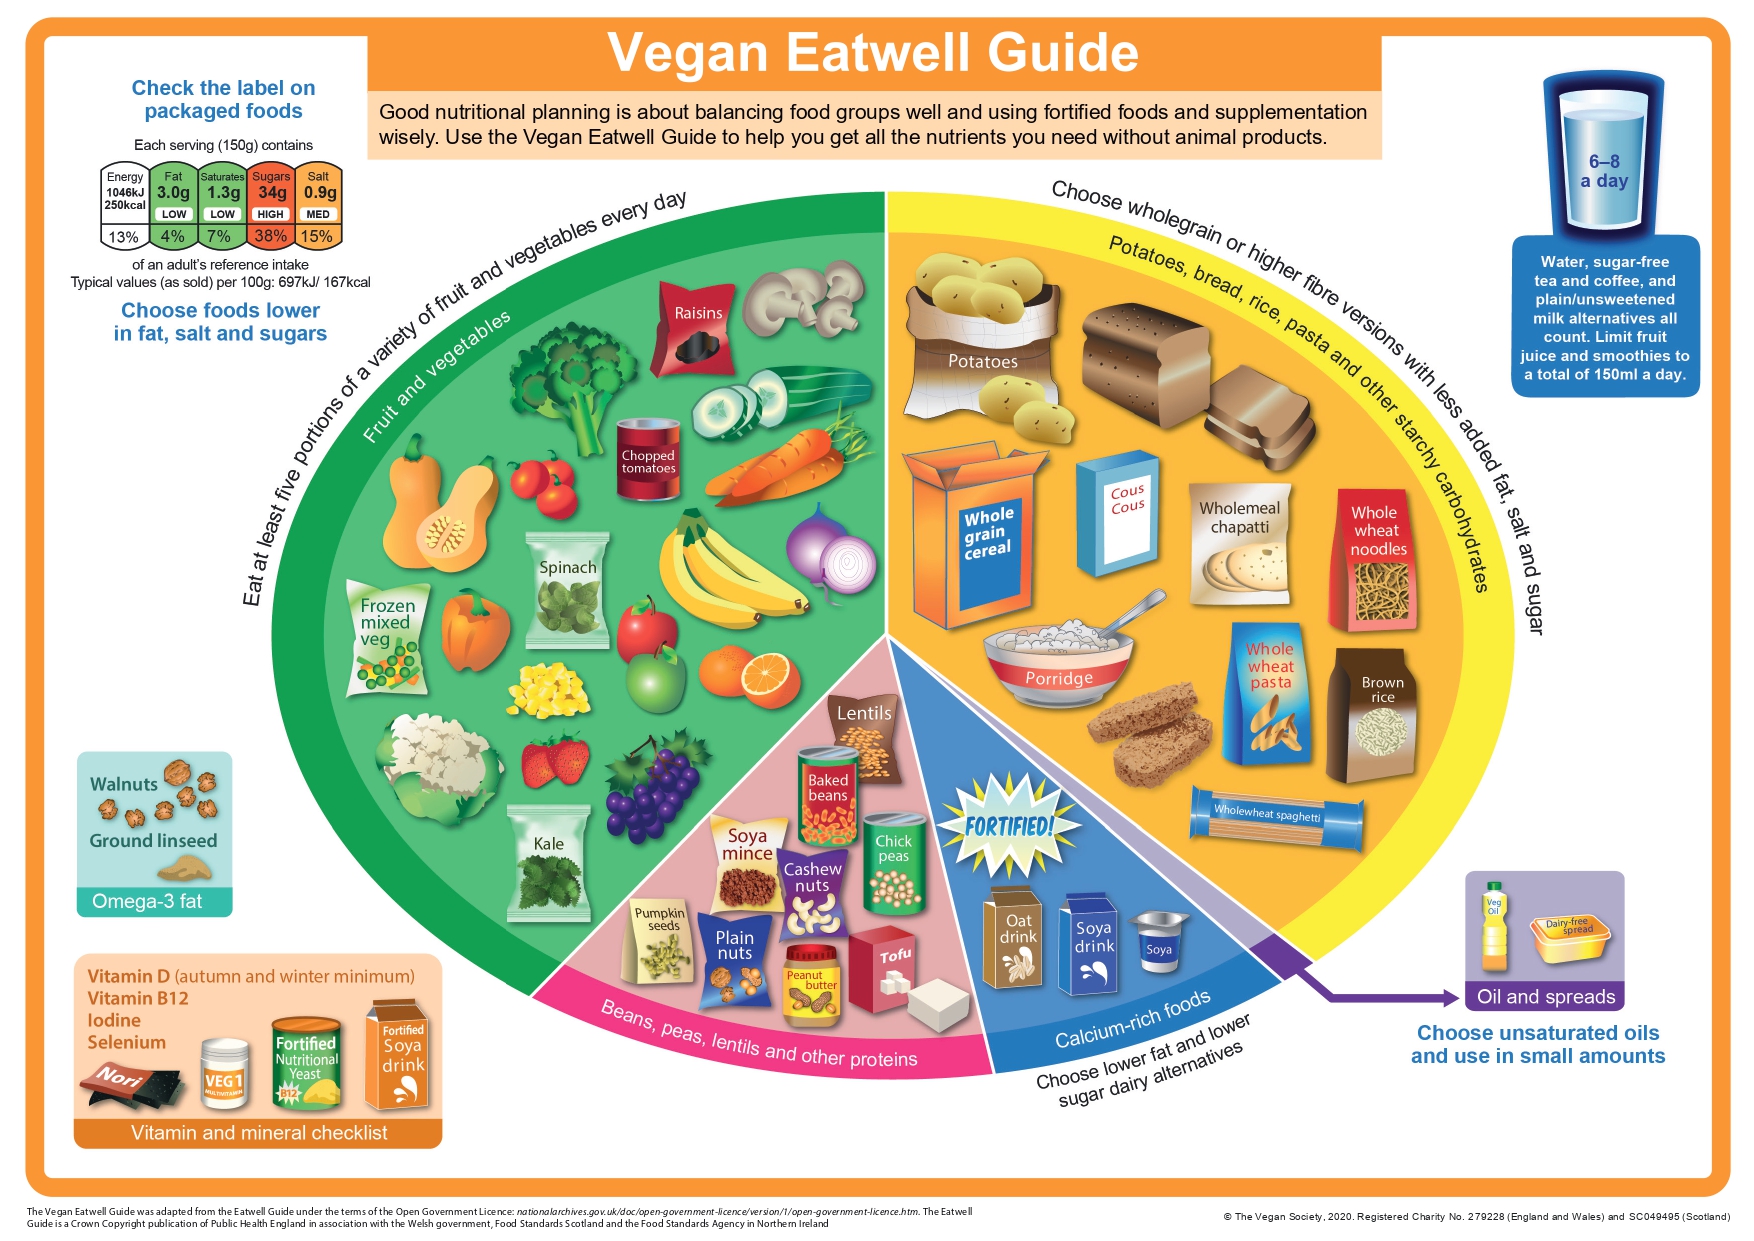 The vegan Eatwell Guide